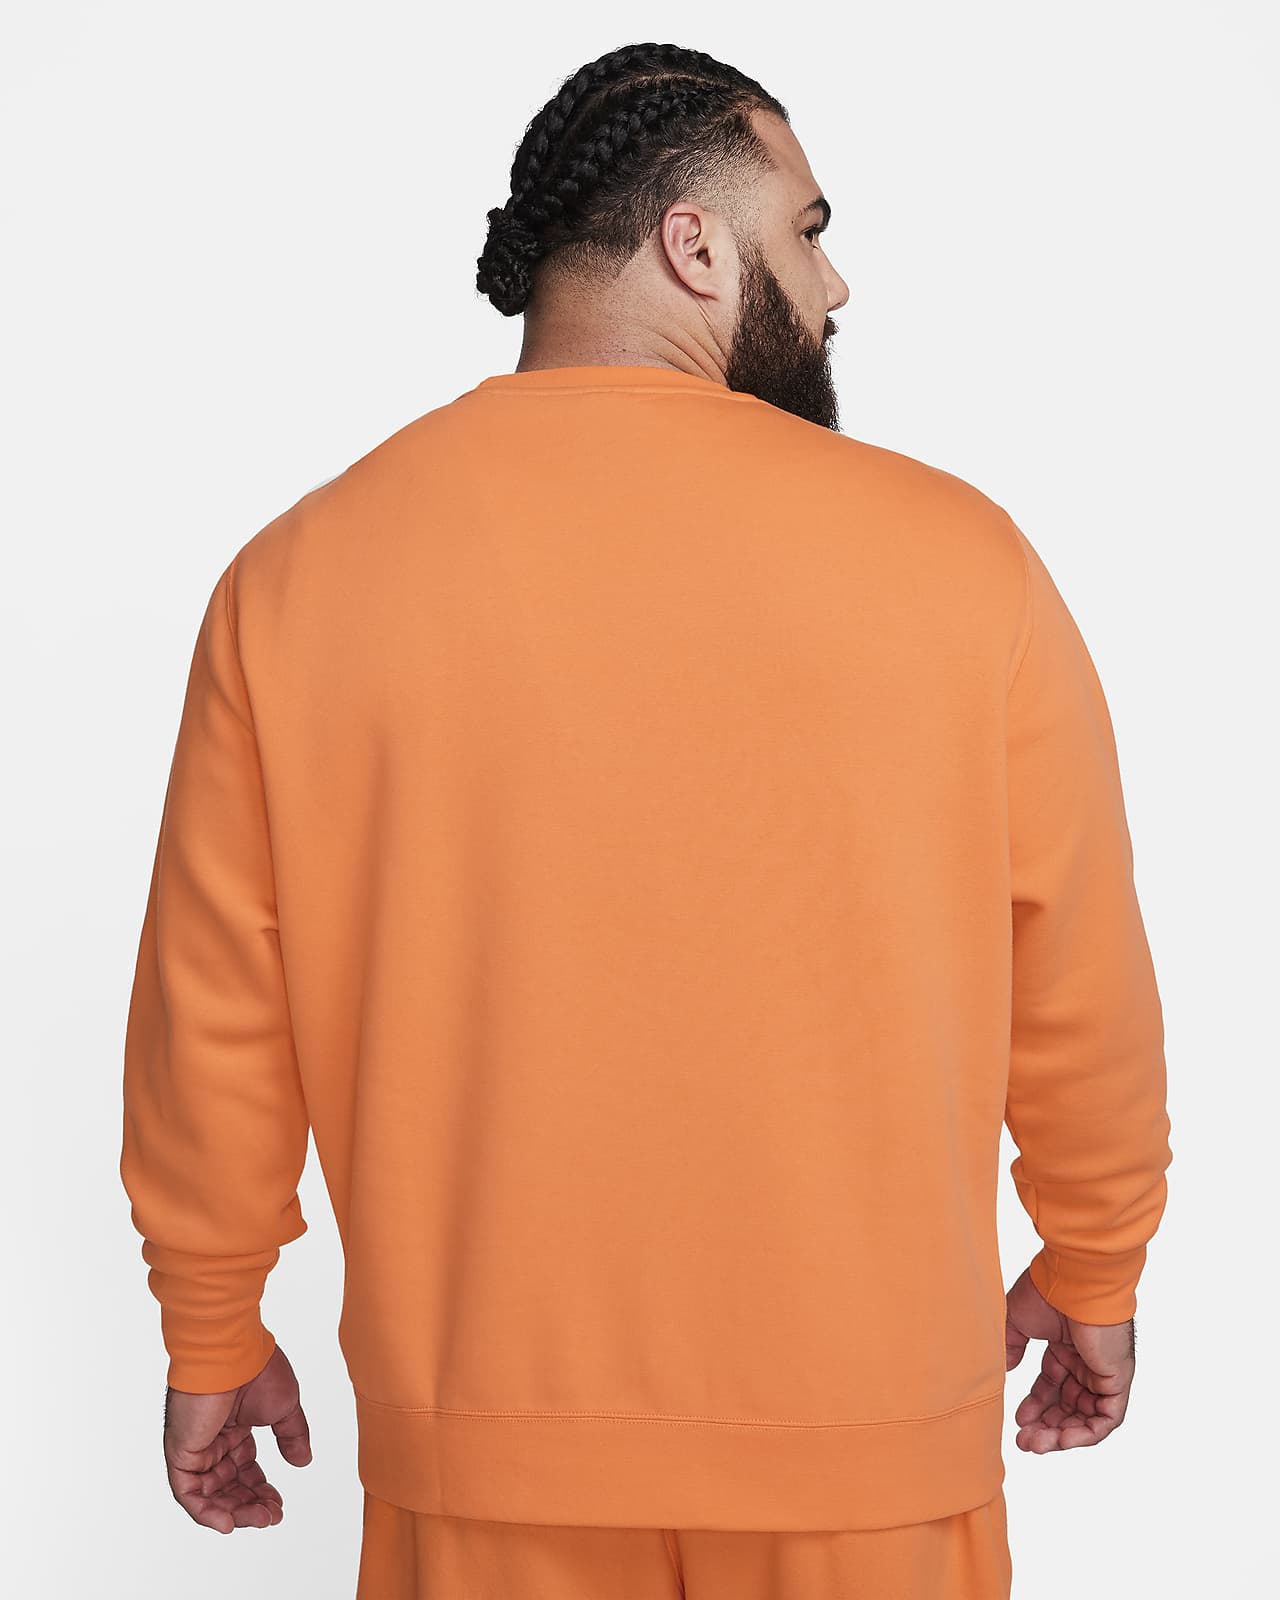 Oversized Logo-Graphic Crew-Neck Sweatshirt for Men